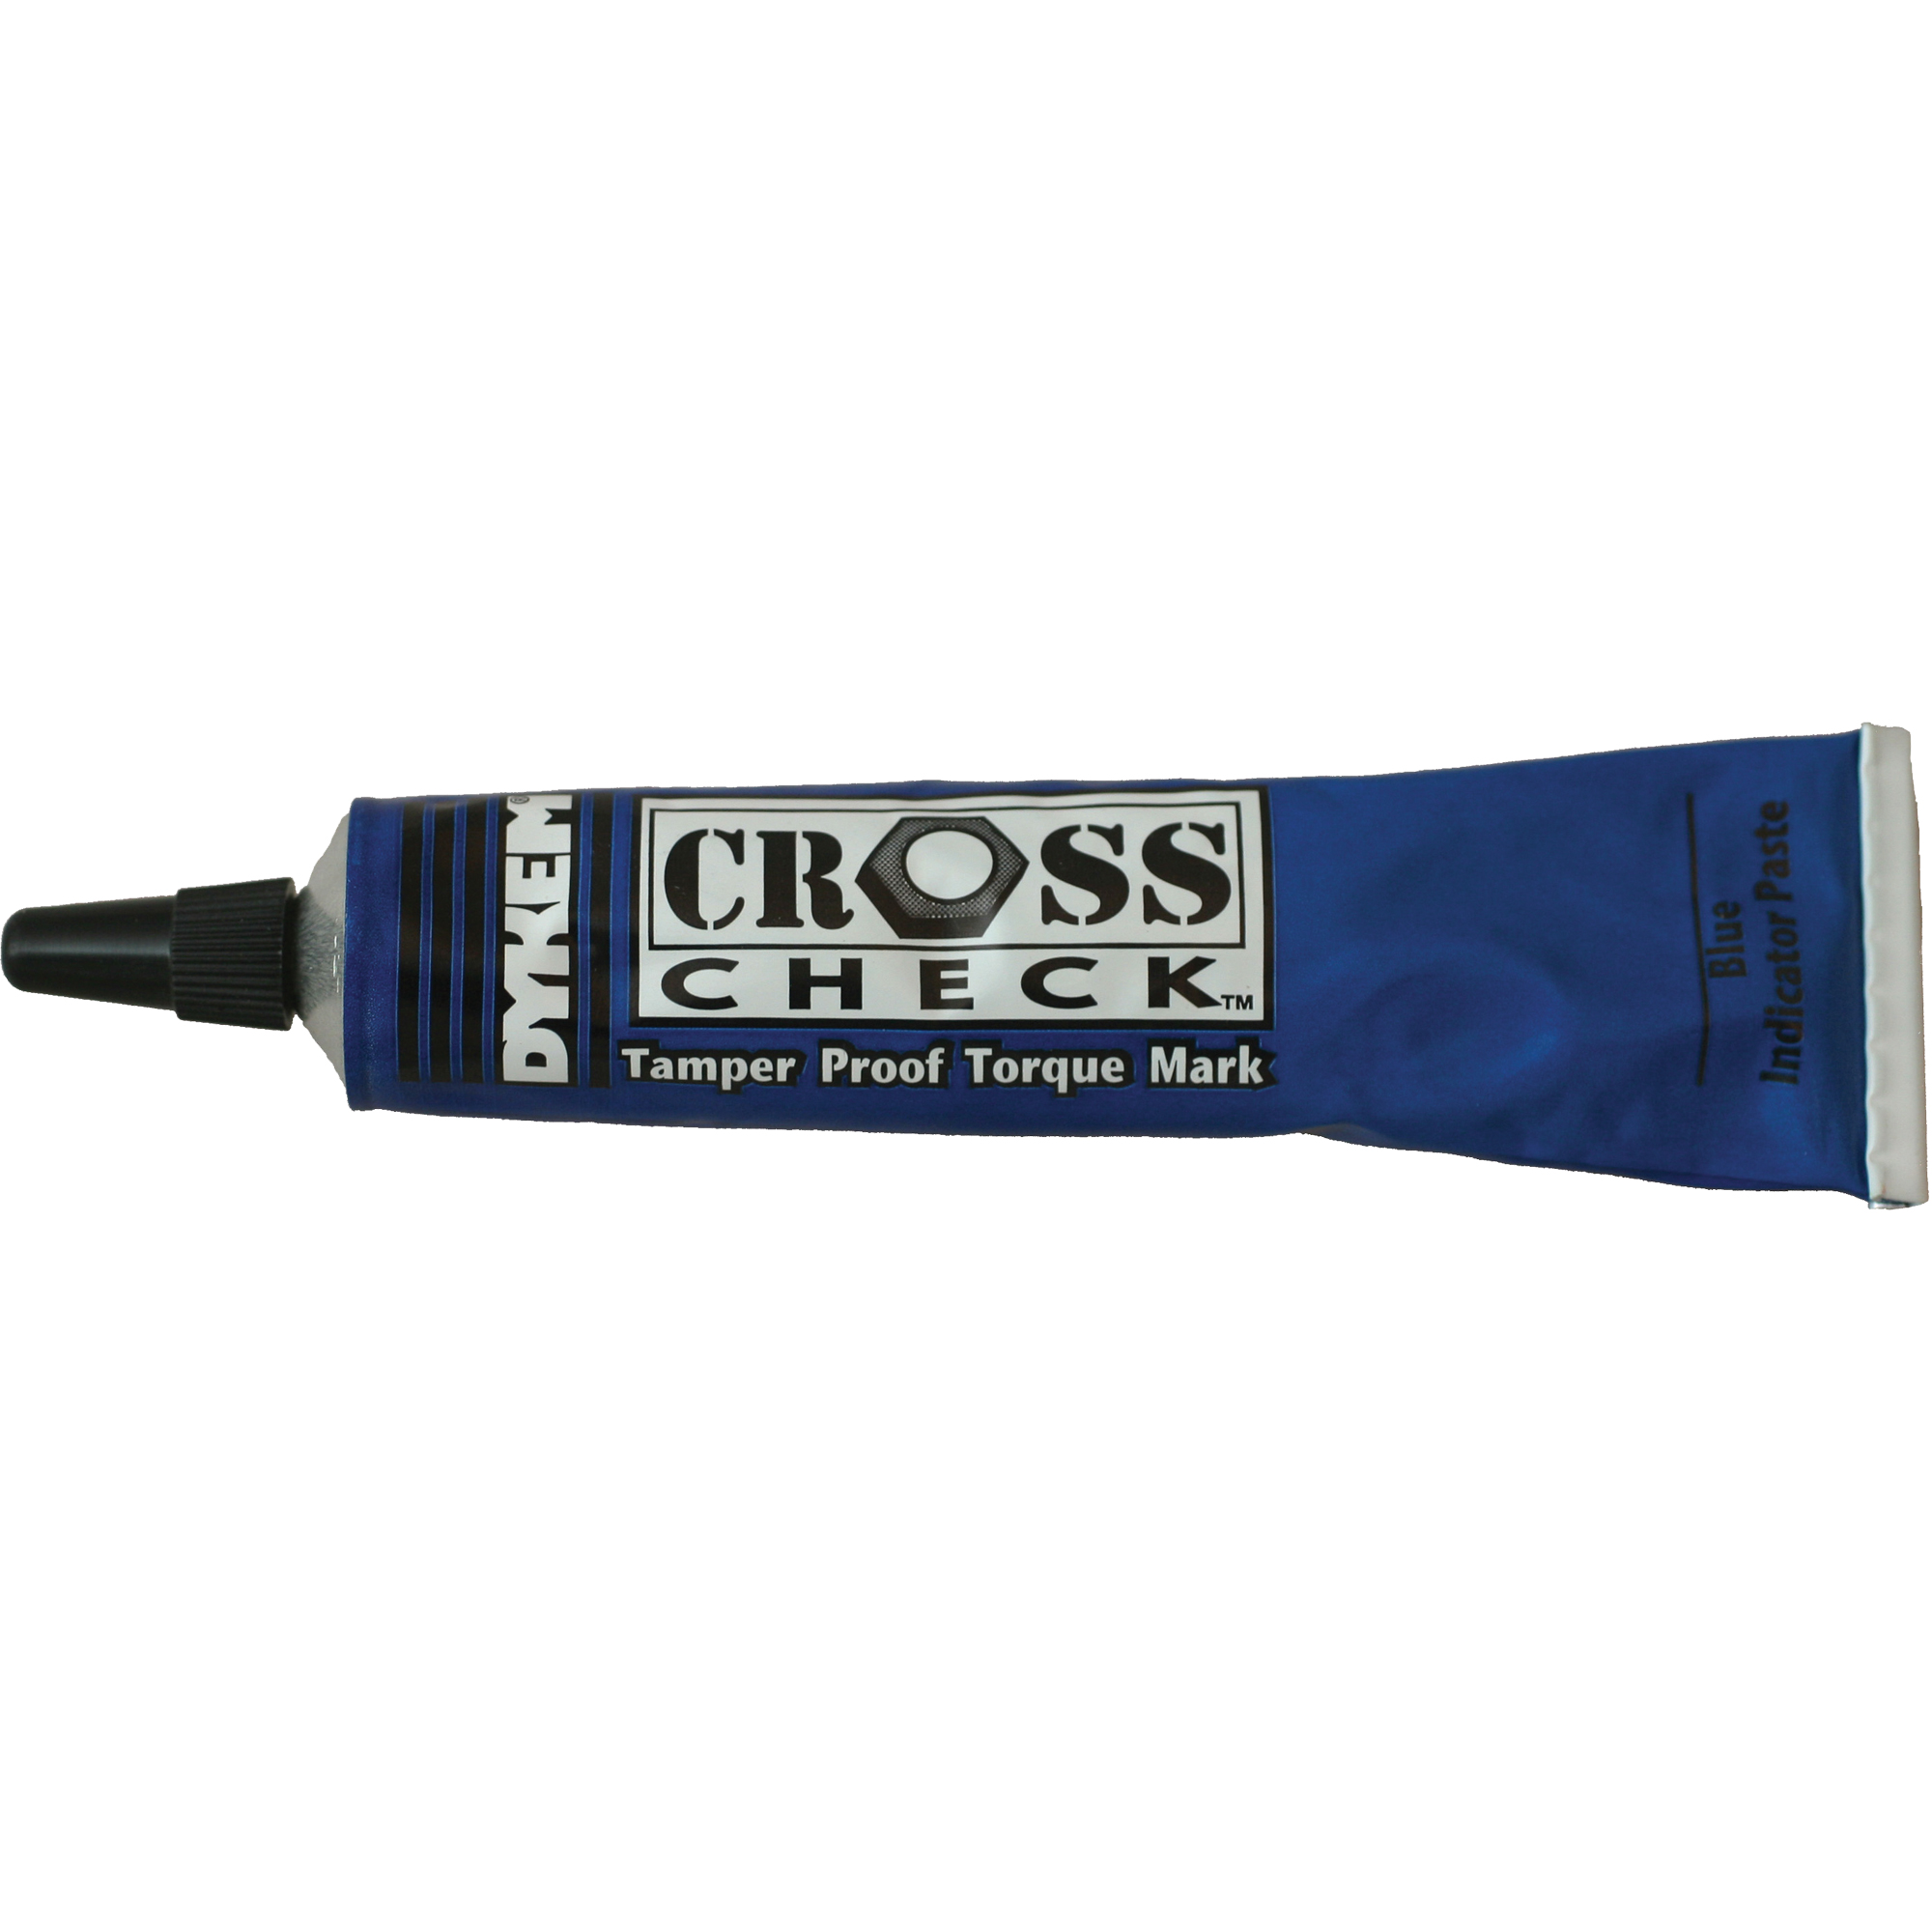 Dykem Cross Check Torque Seal Tamper-Proof Indicator Paste Blue 